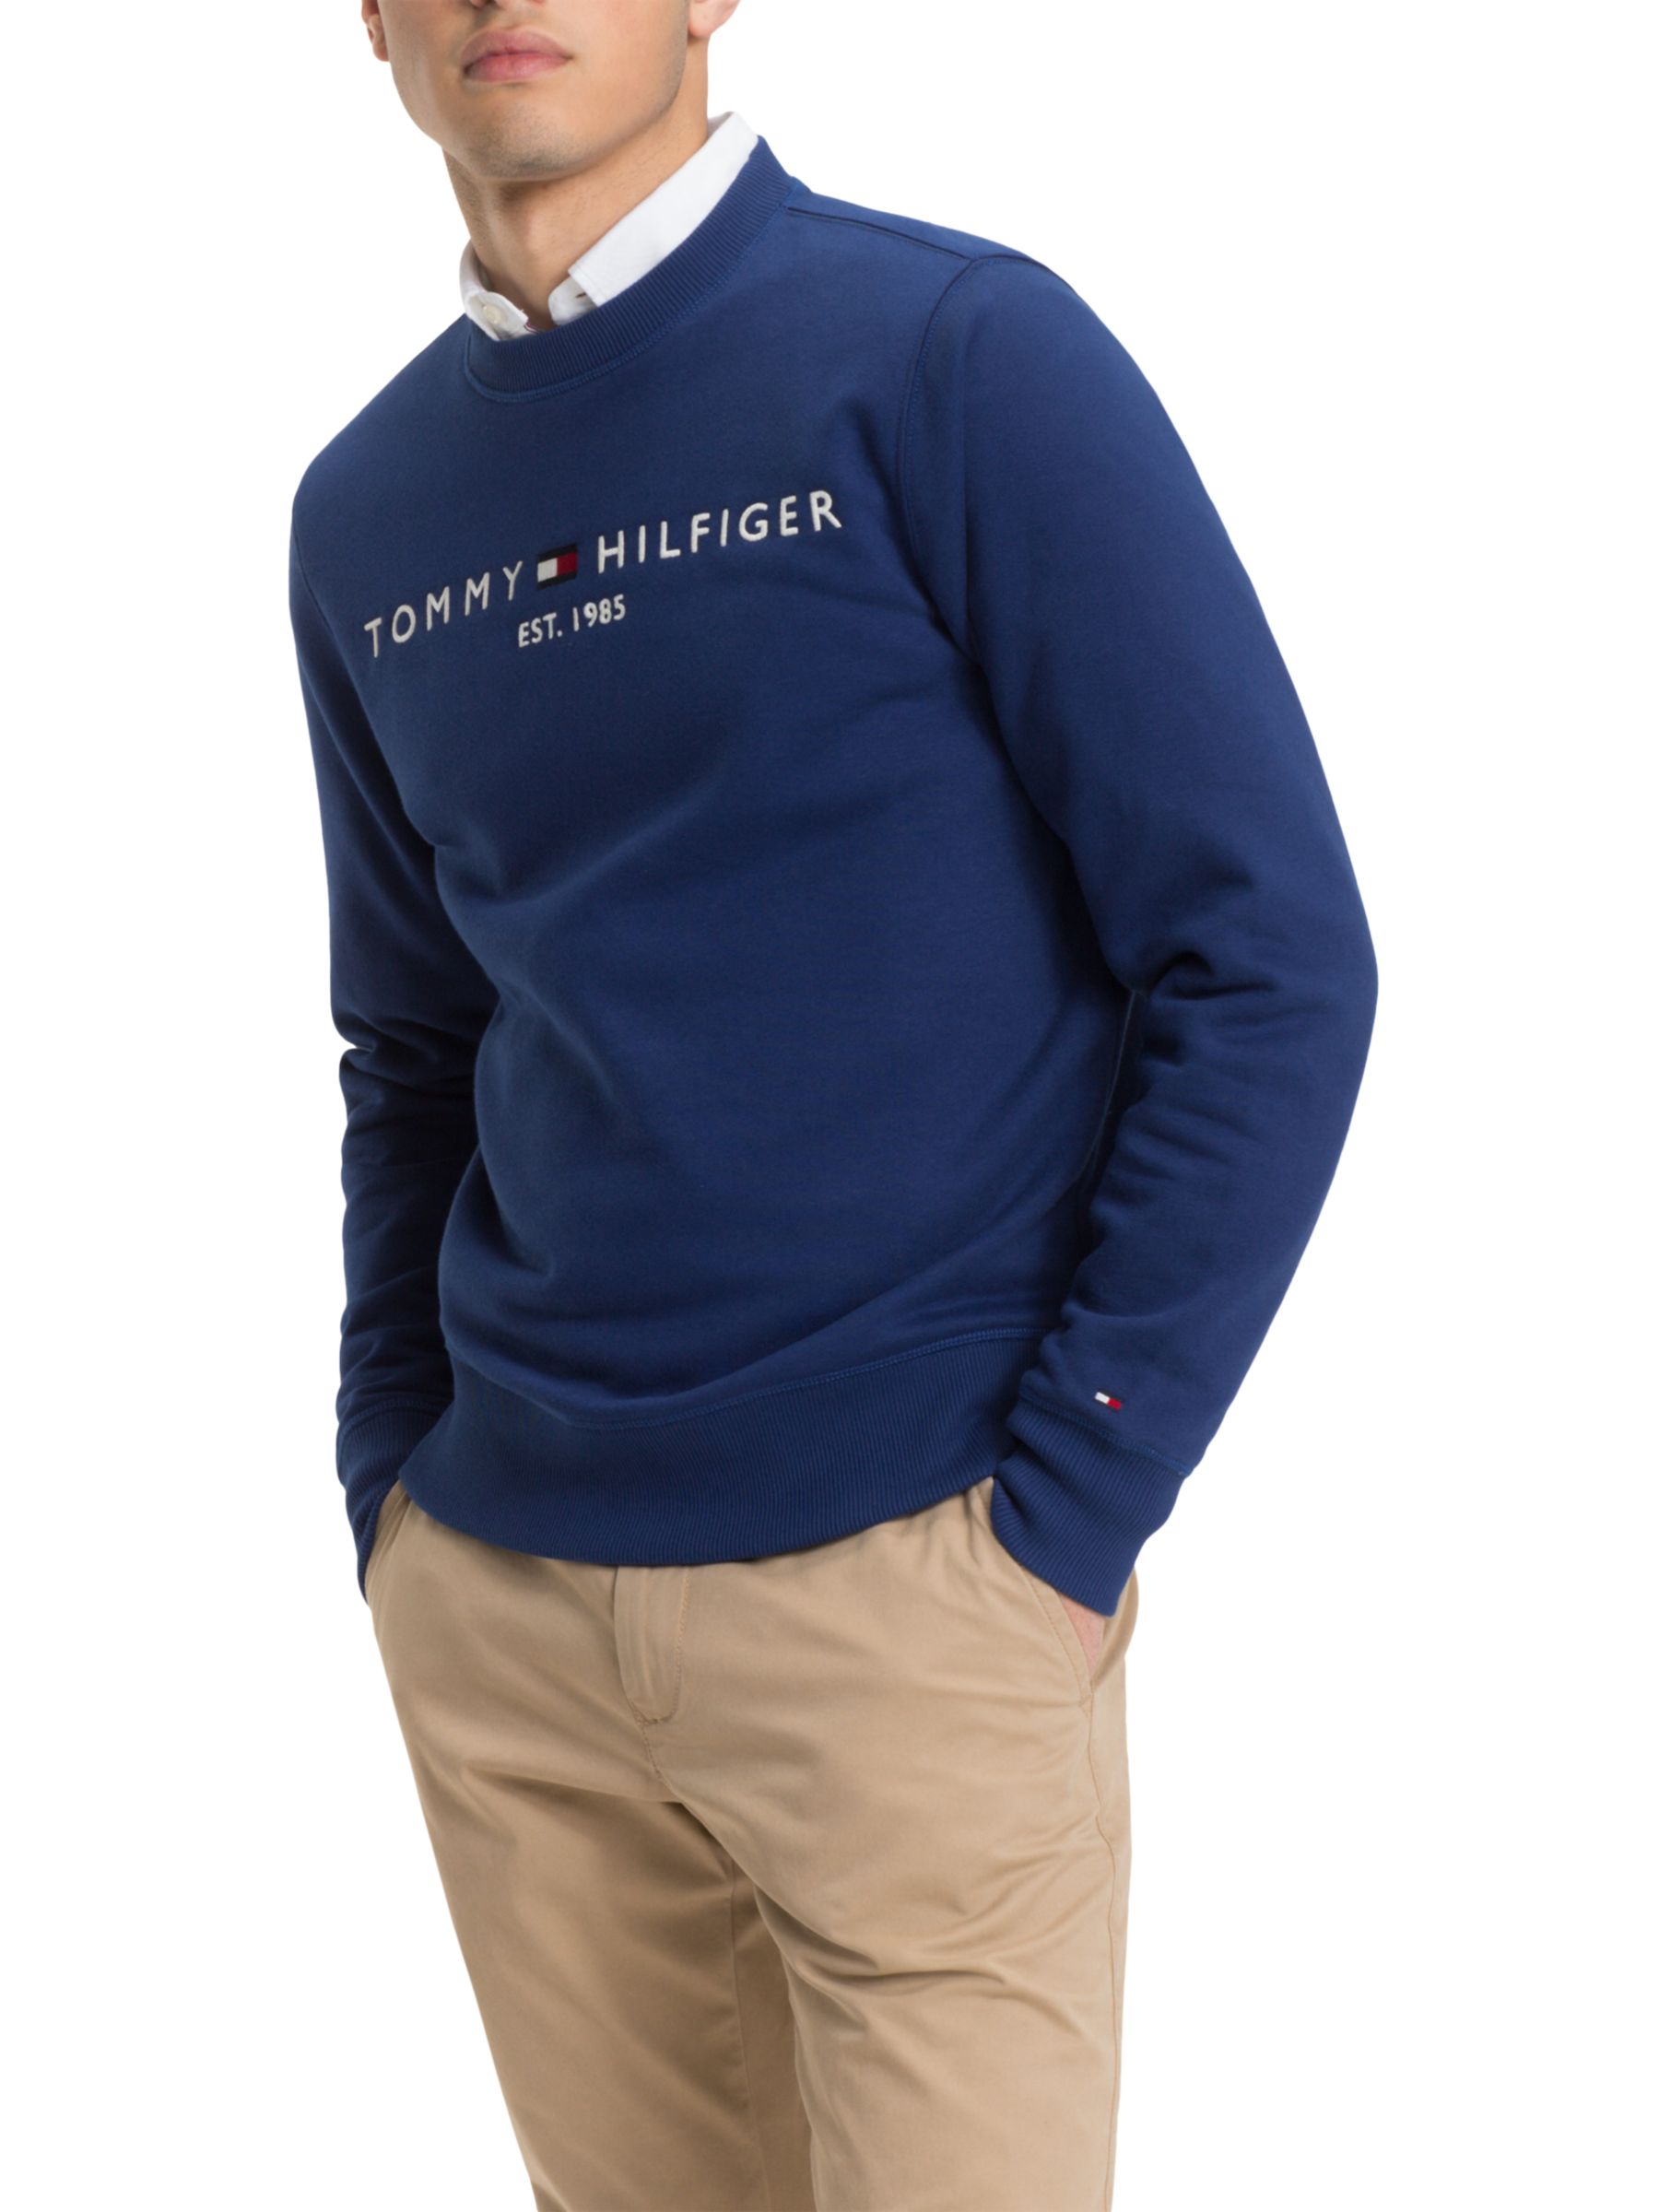 tommy hilfiger logo hoodie blue